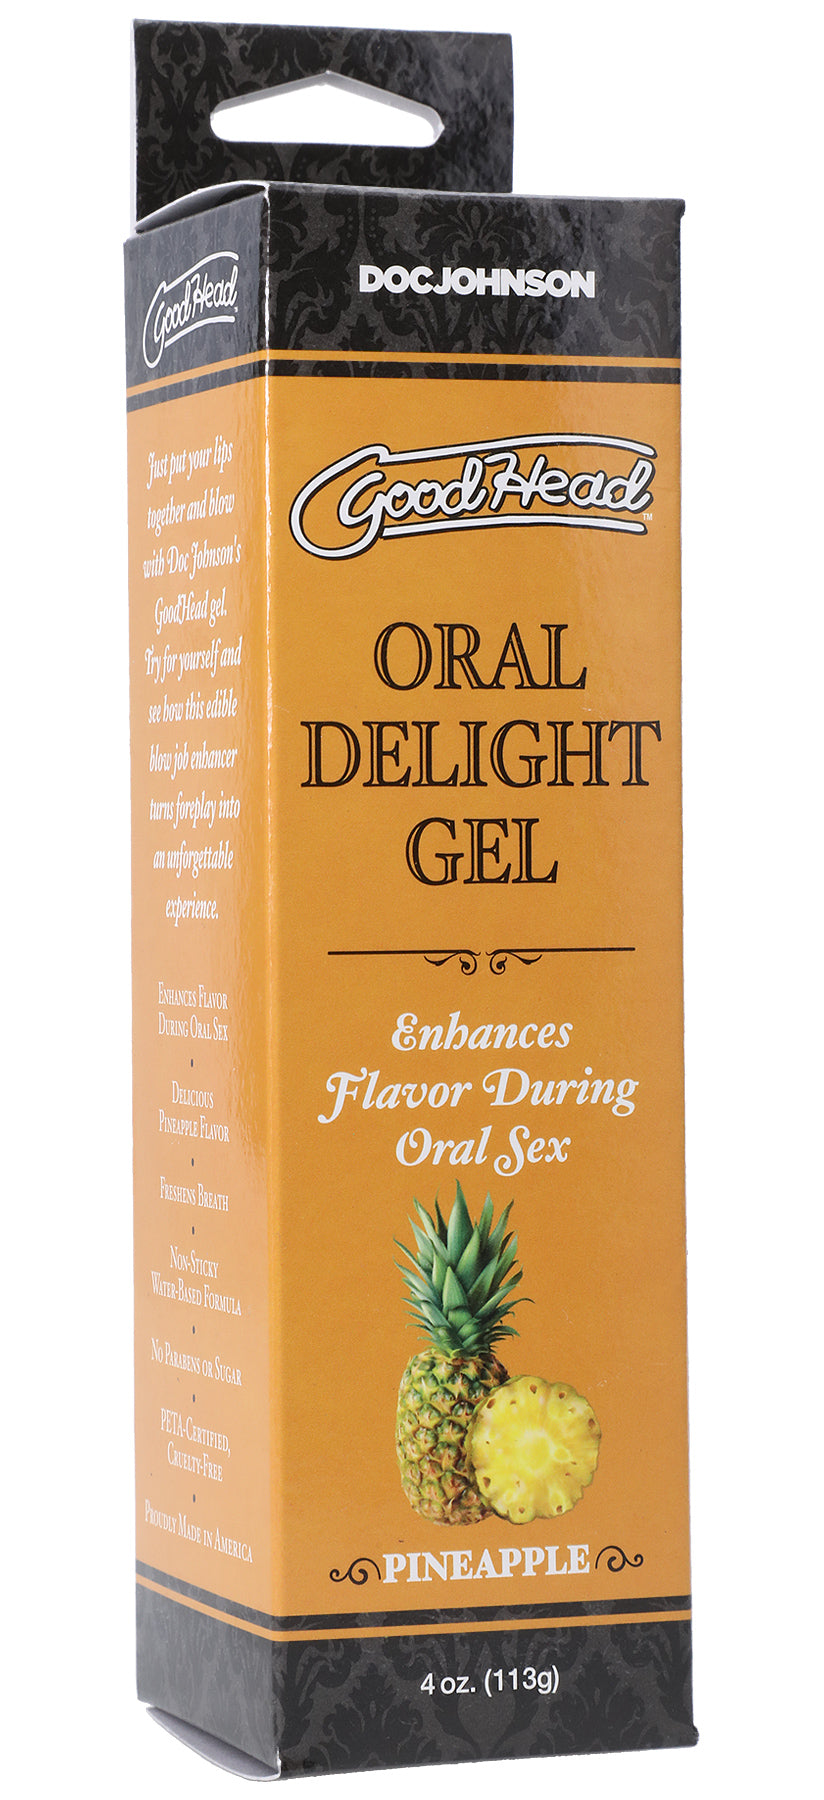 Goodhead - Oral Delight Gel 4 Oz Pineapple